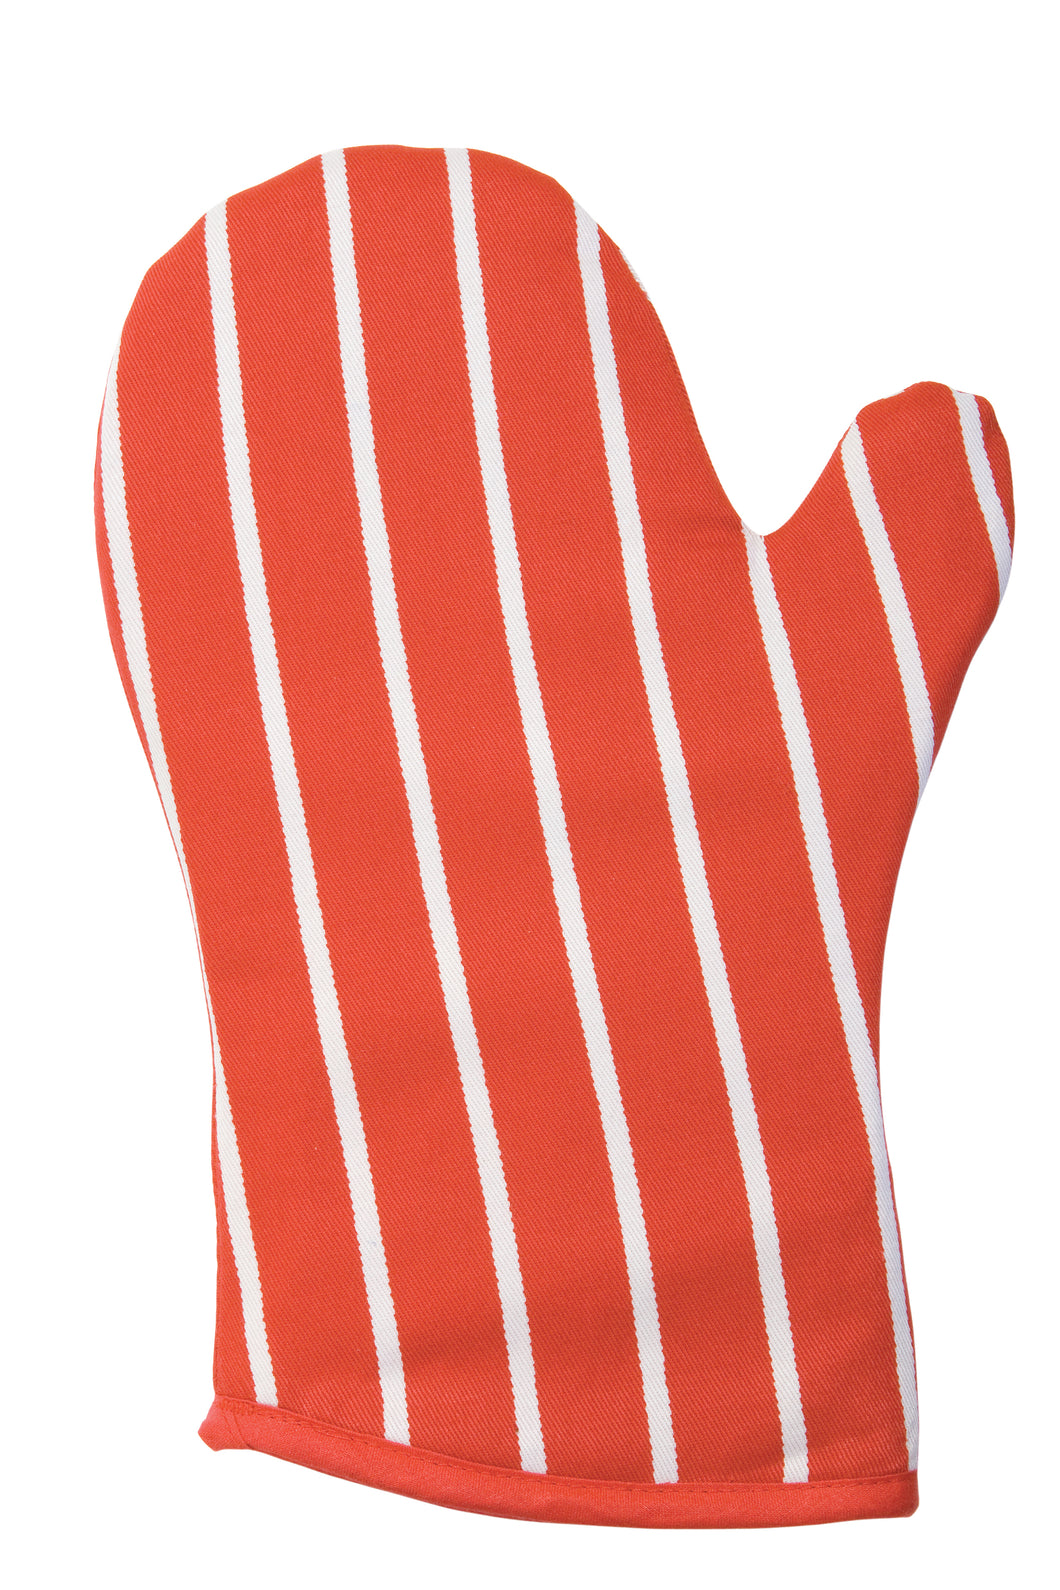 Dexam Butchers Stripe Gauntlet - Red